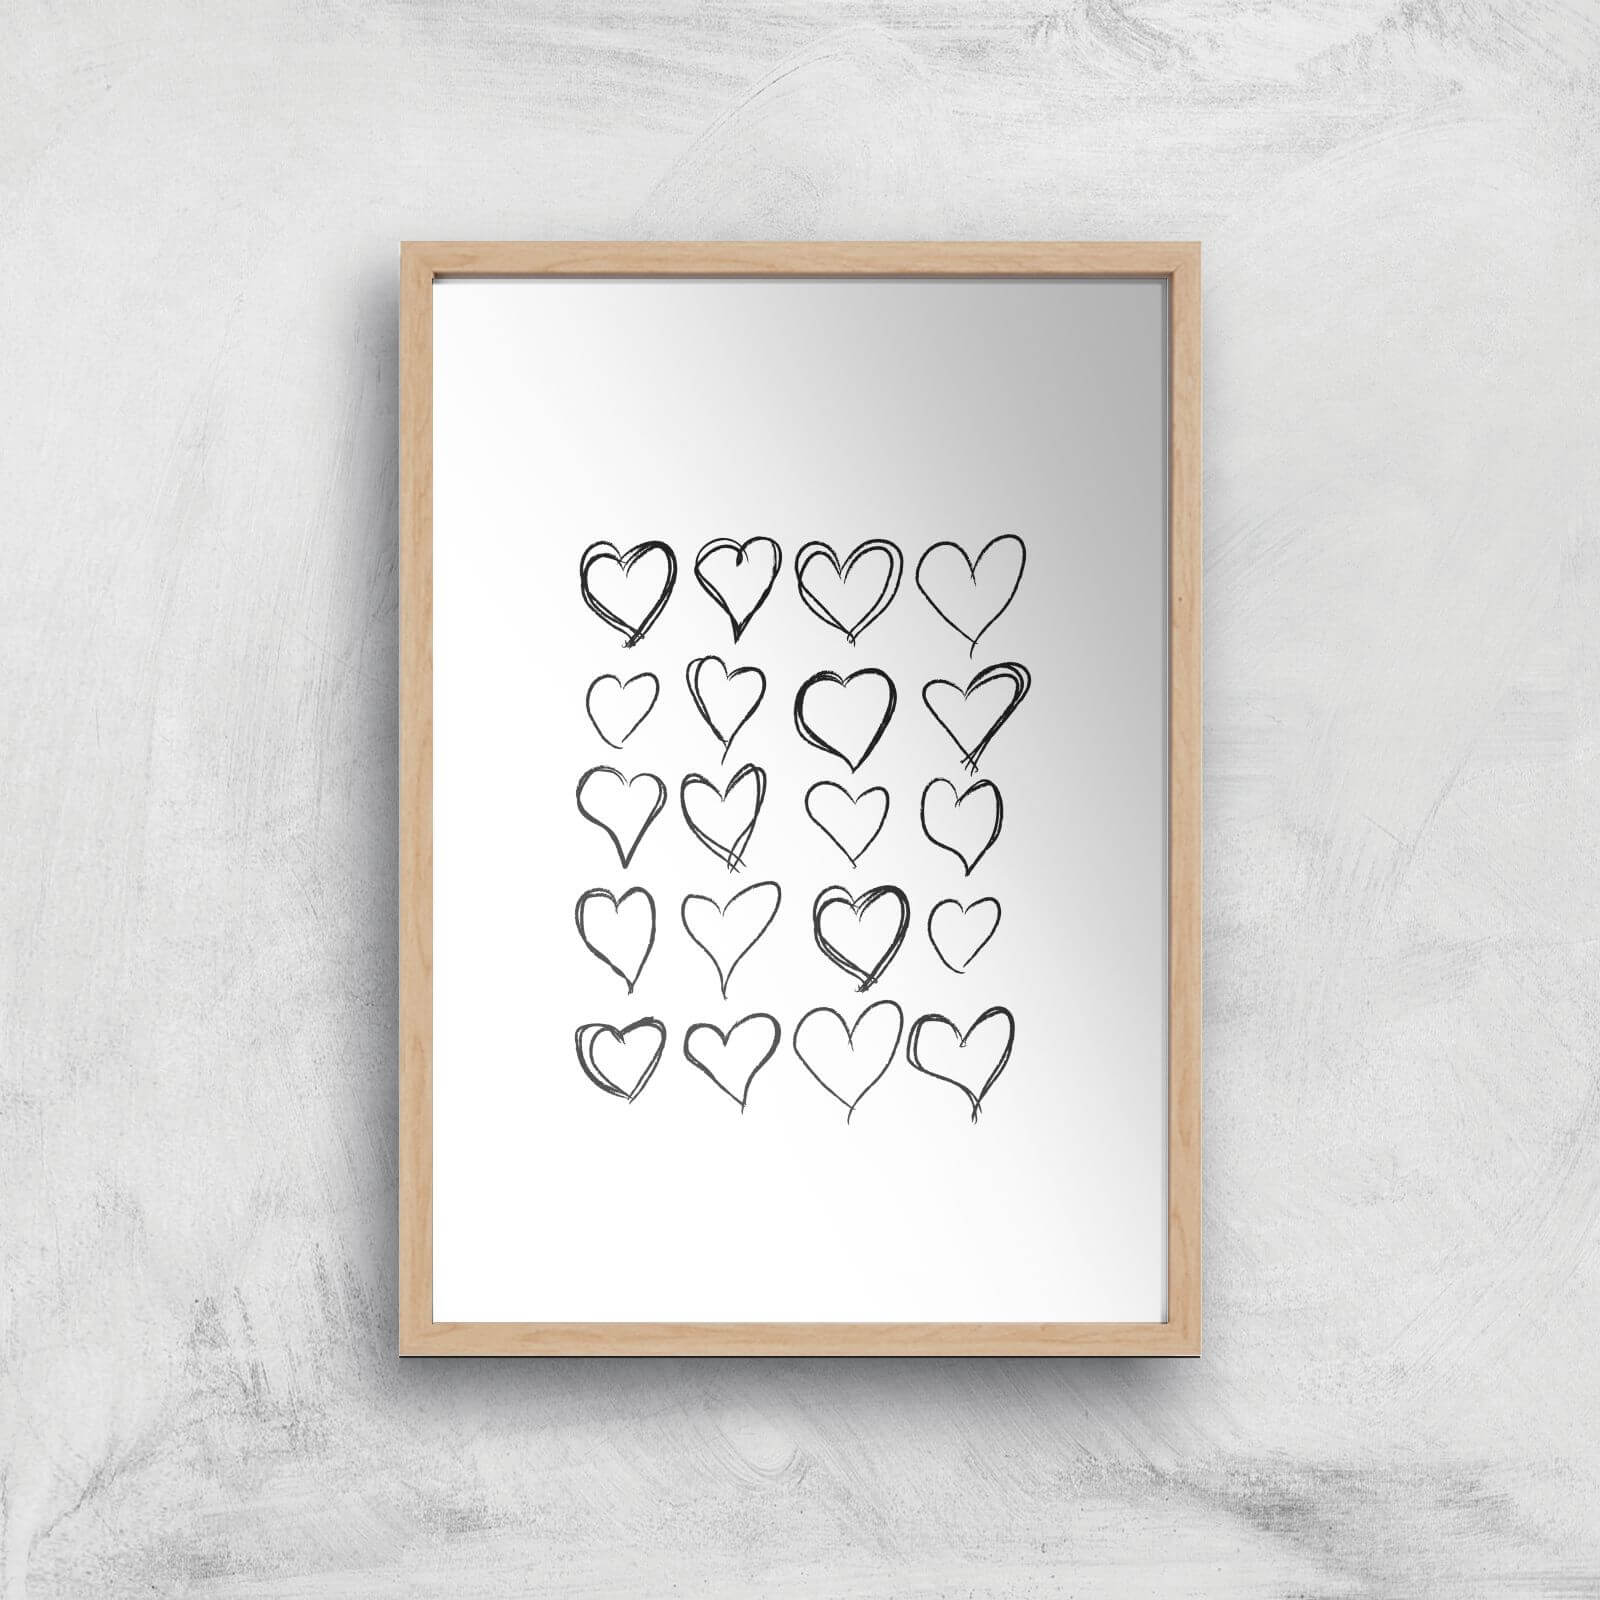 Love Hearts Giclee Art Print - A4 - Wooden Frame